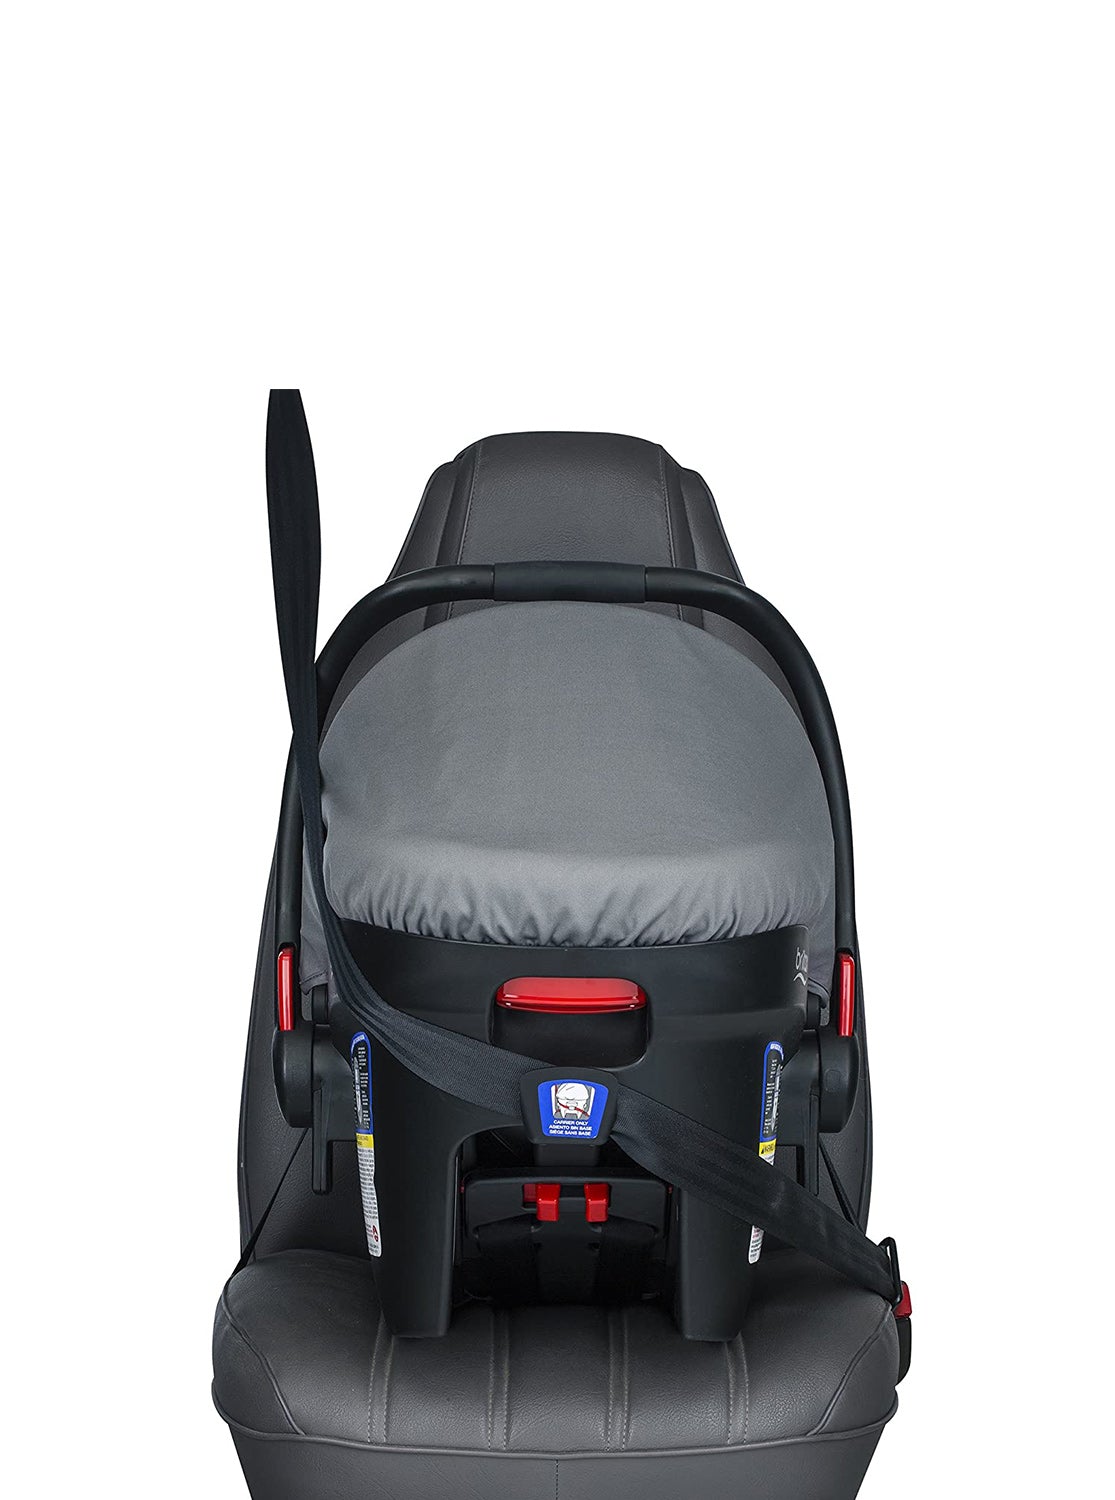 BRITAX B-Safe Ultra Infant Car Seat, -- ANB Baby